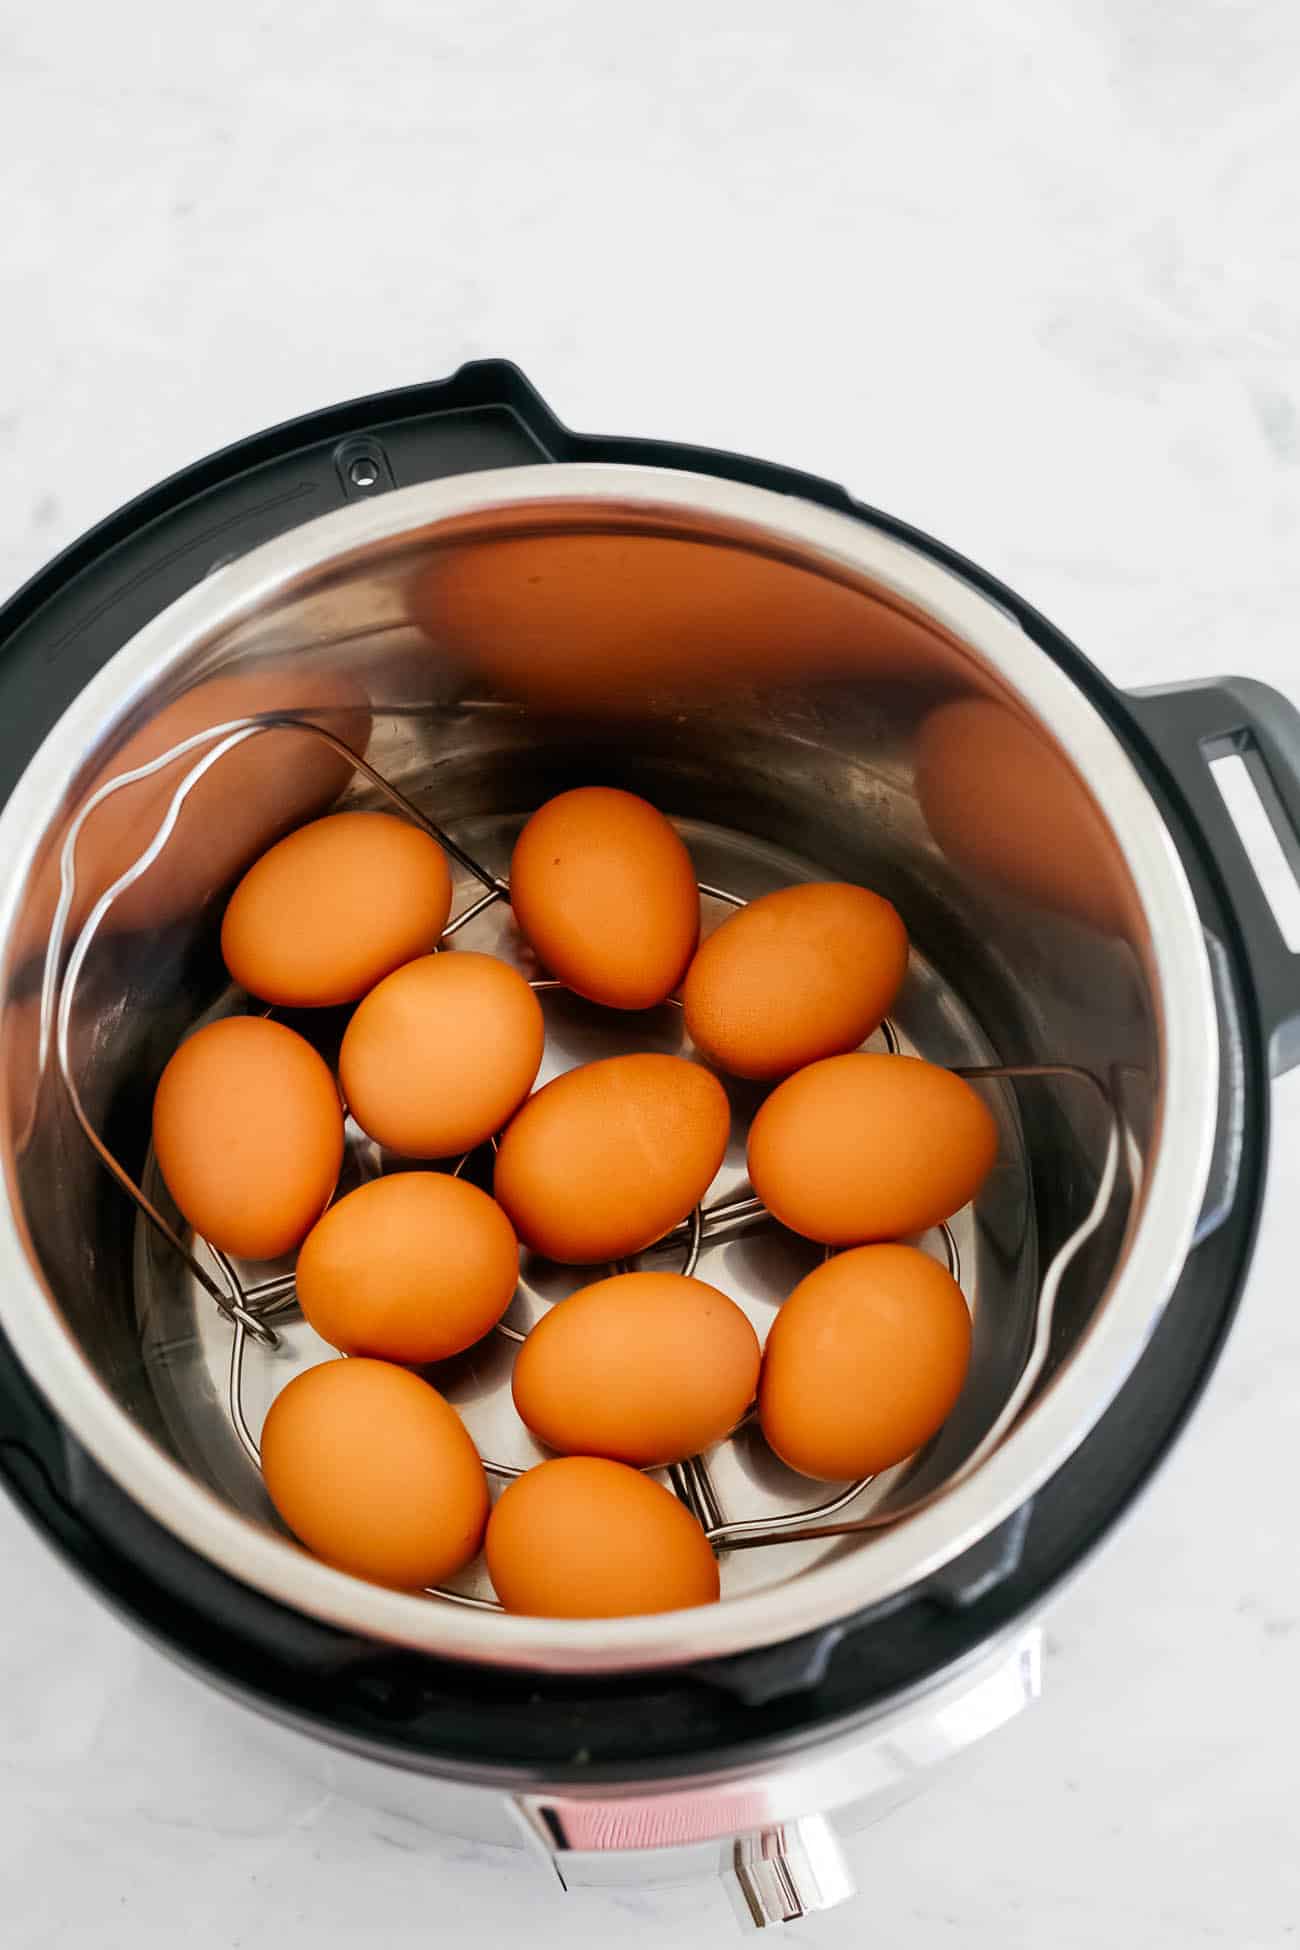 Hard boiled eggs inside of an Instant Pot.